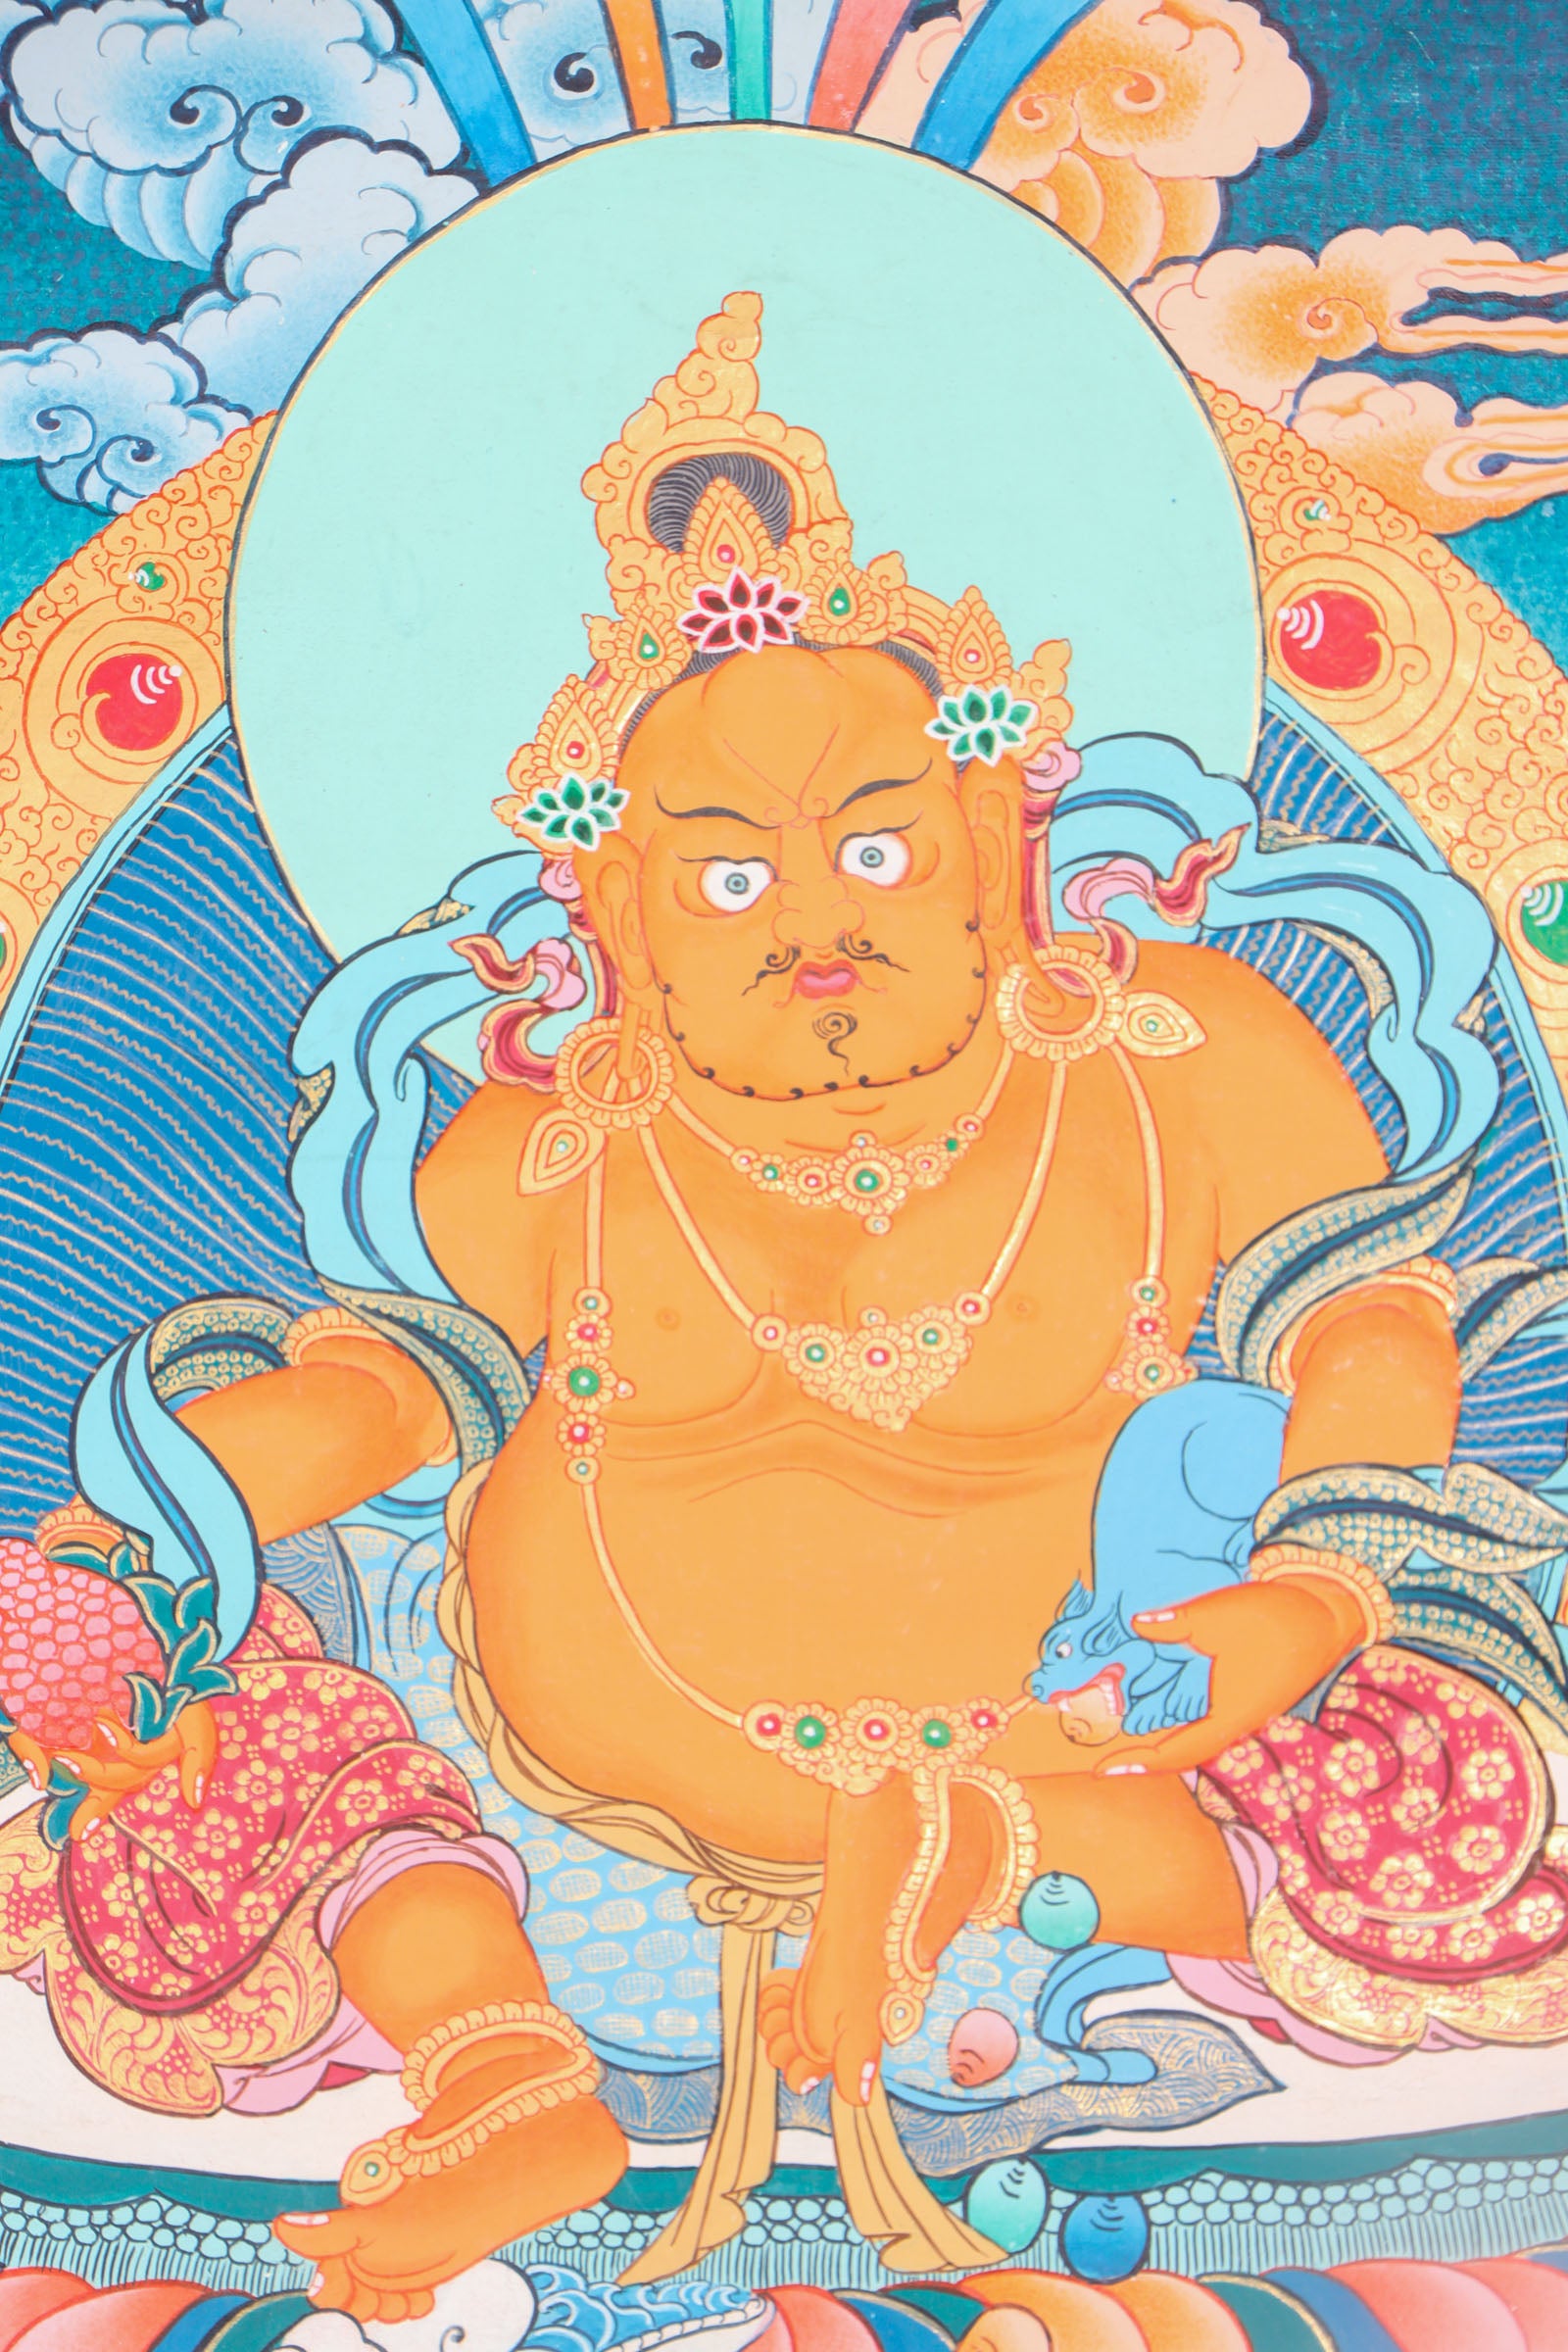 Zambala Thangka Painting for prosperity and abundance.